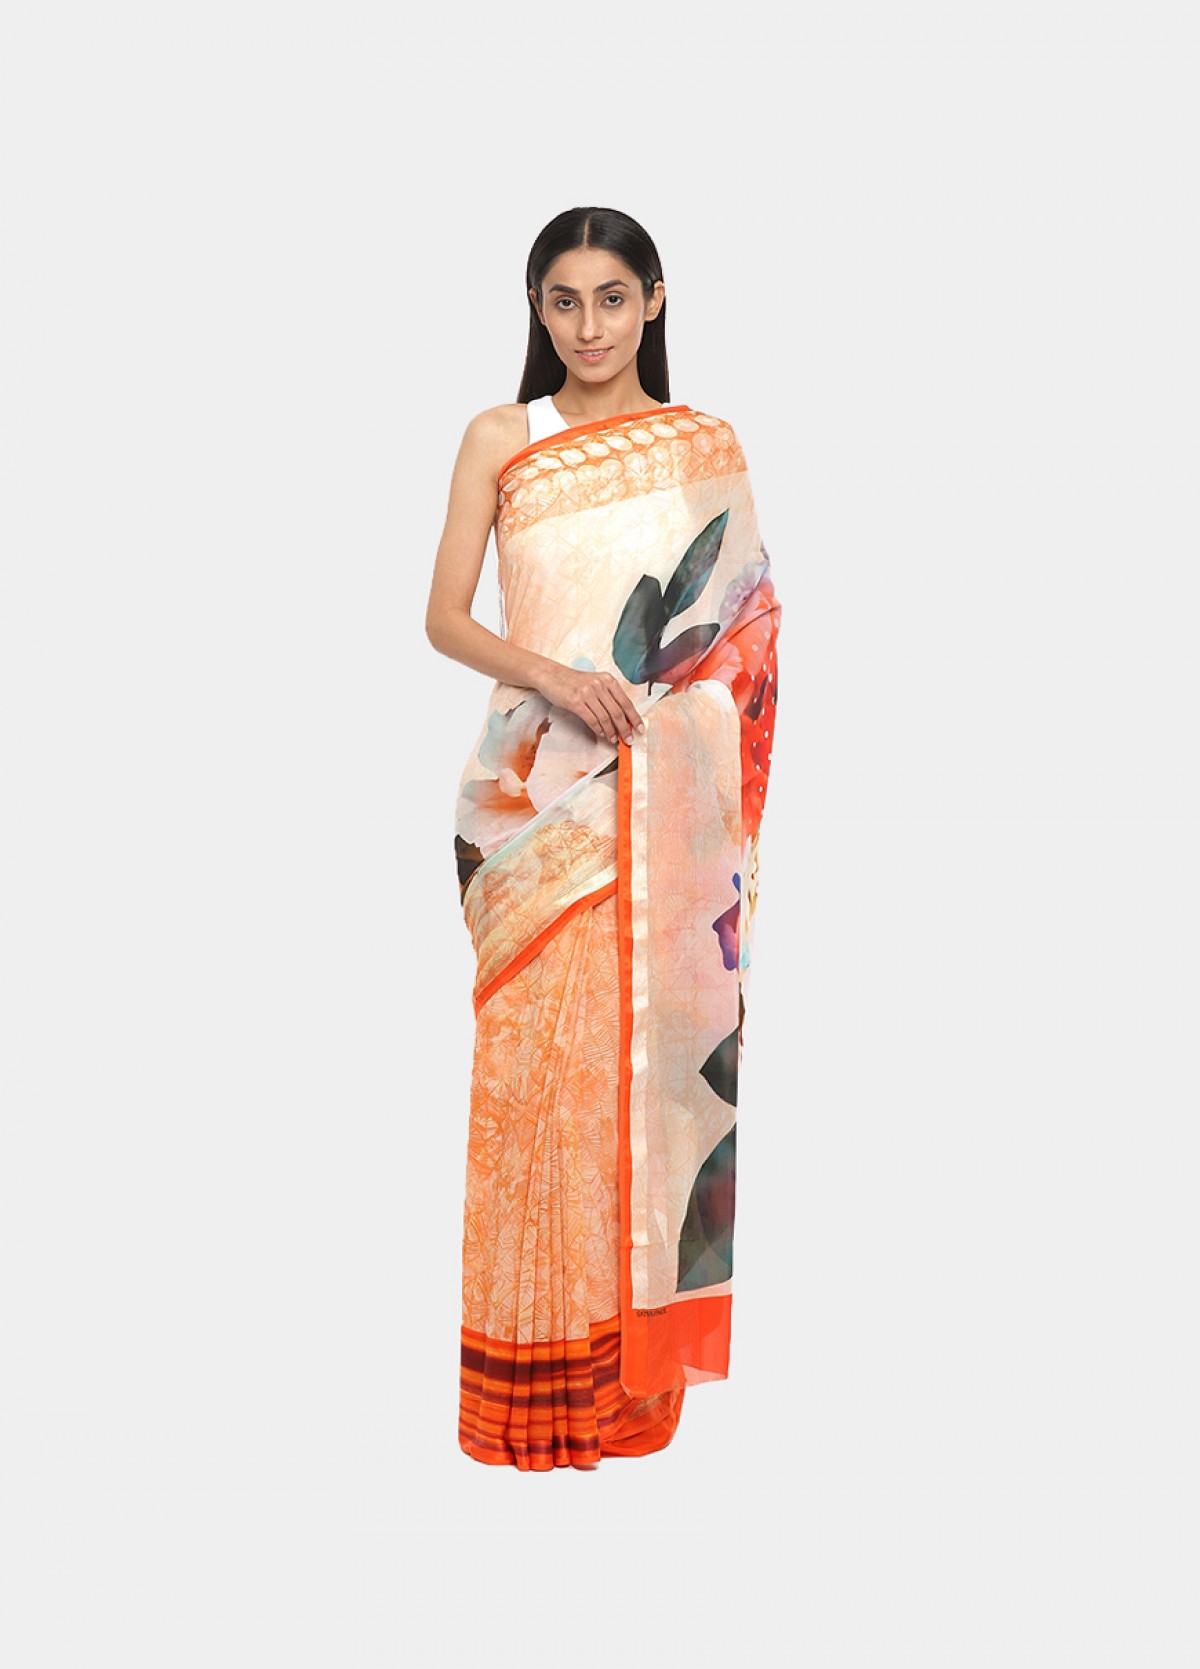 The Regal Blush Sari